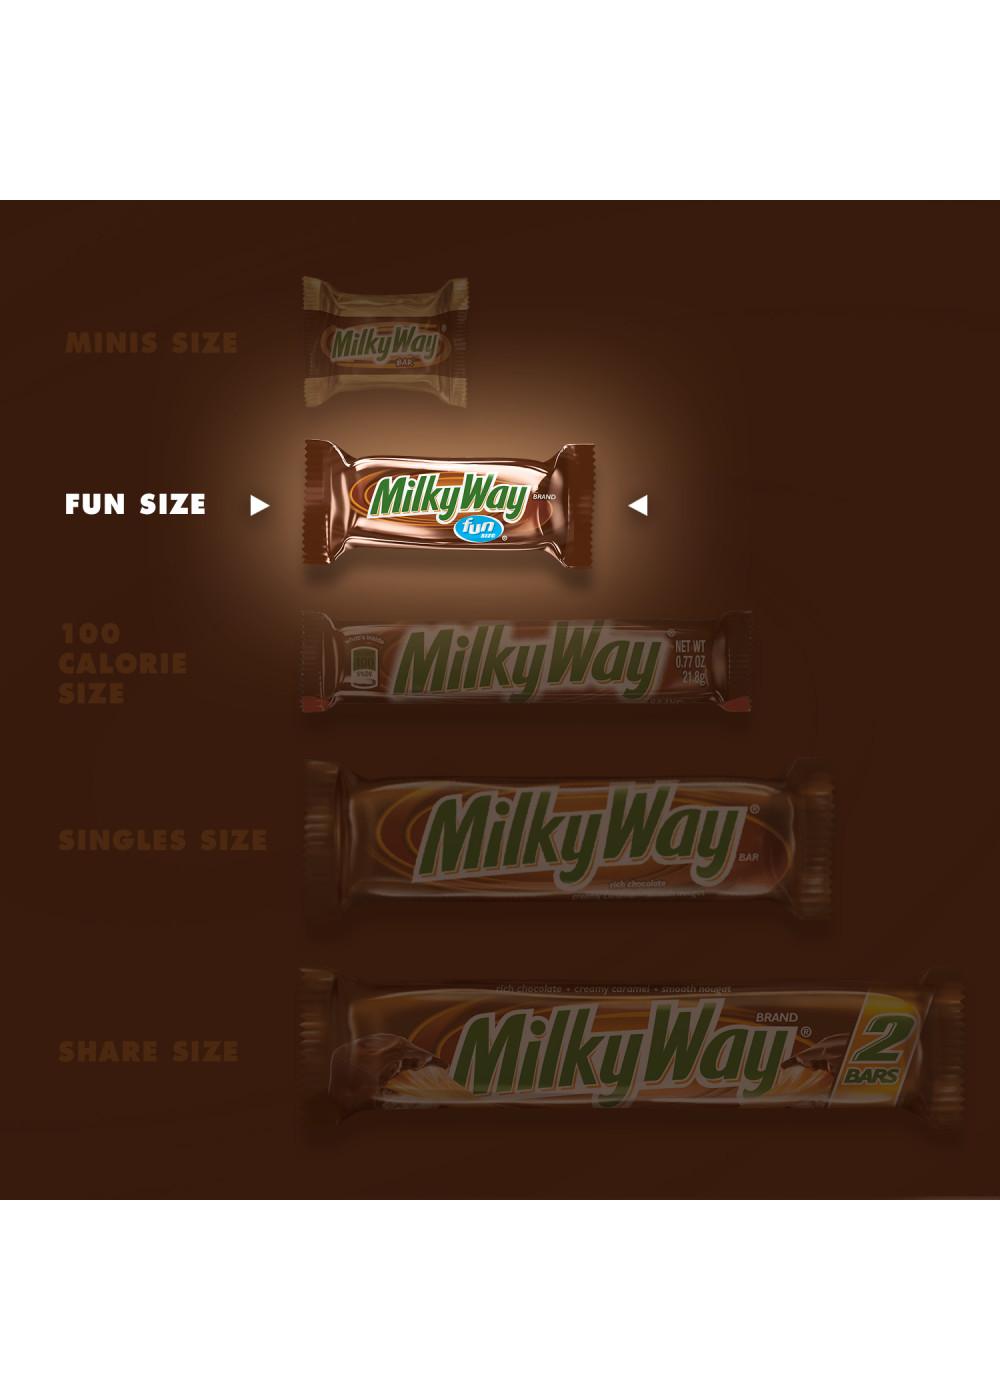 Milky Way Milk Chocolate Fun Size Candy Bars; image 2 of 3